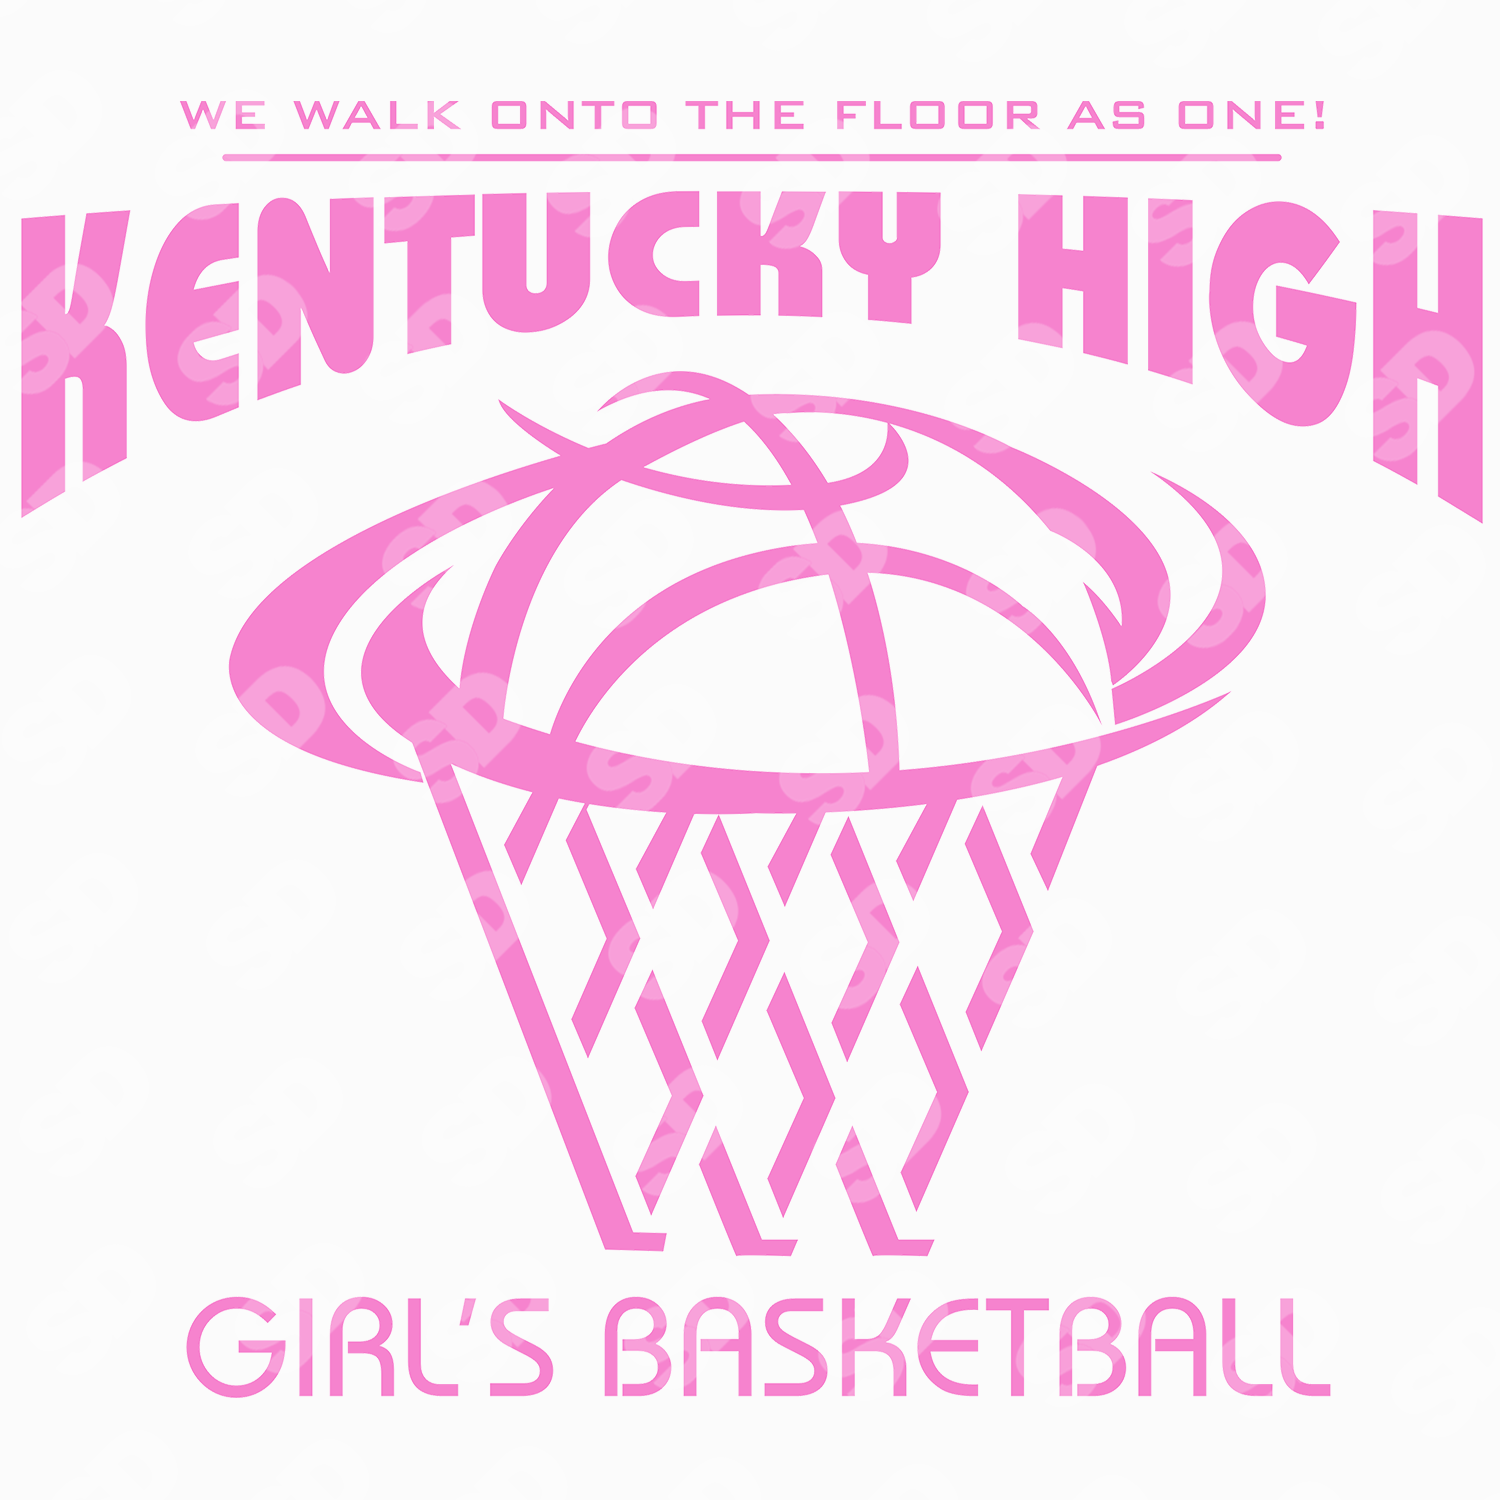 Basketball Template Design (197246)